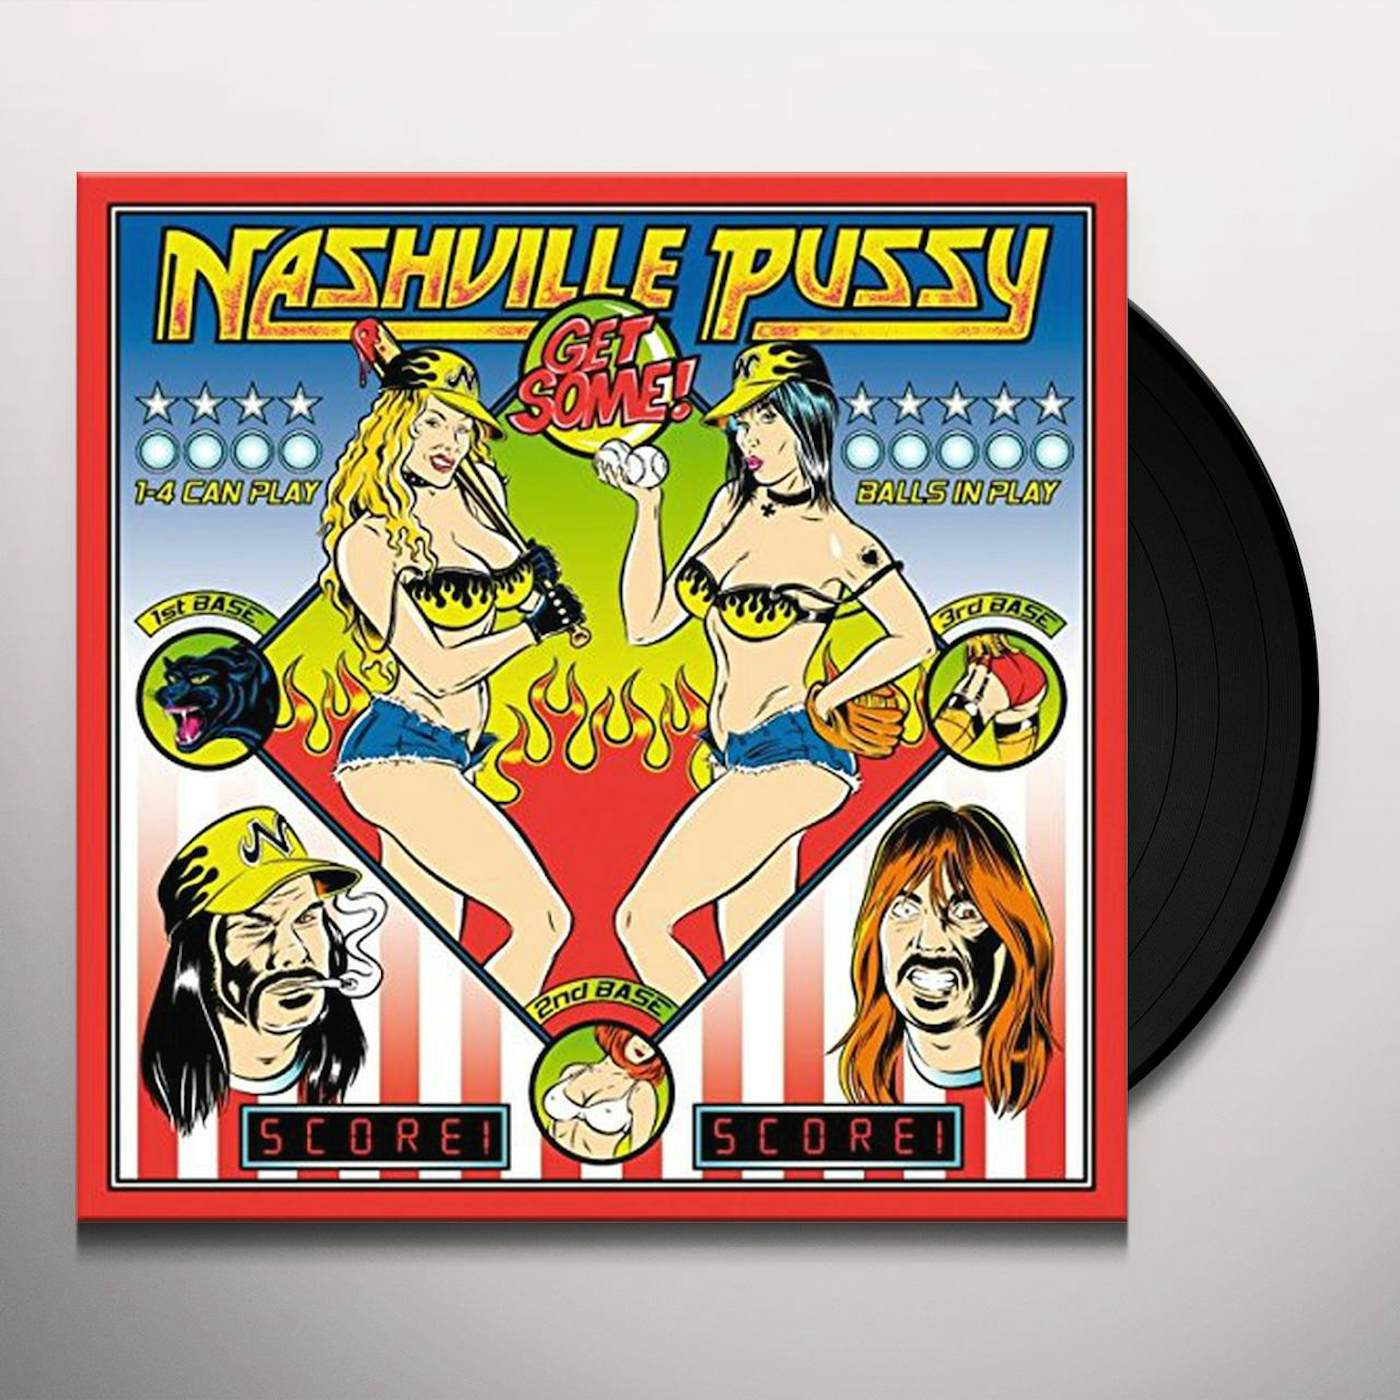 Nashville Pussy Get Some Vinyl Record